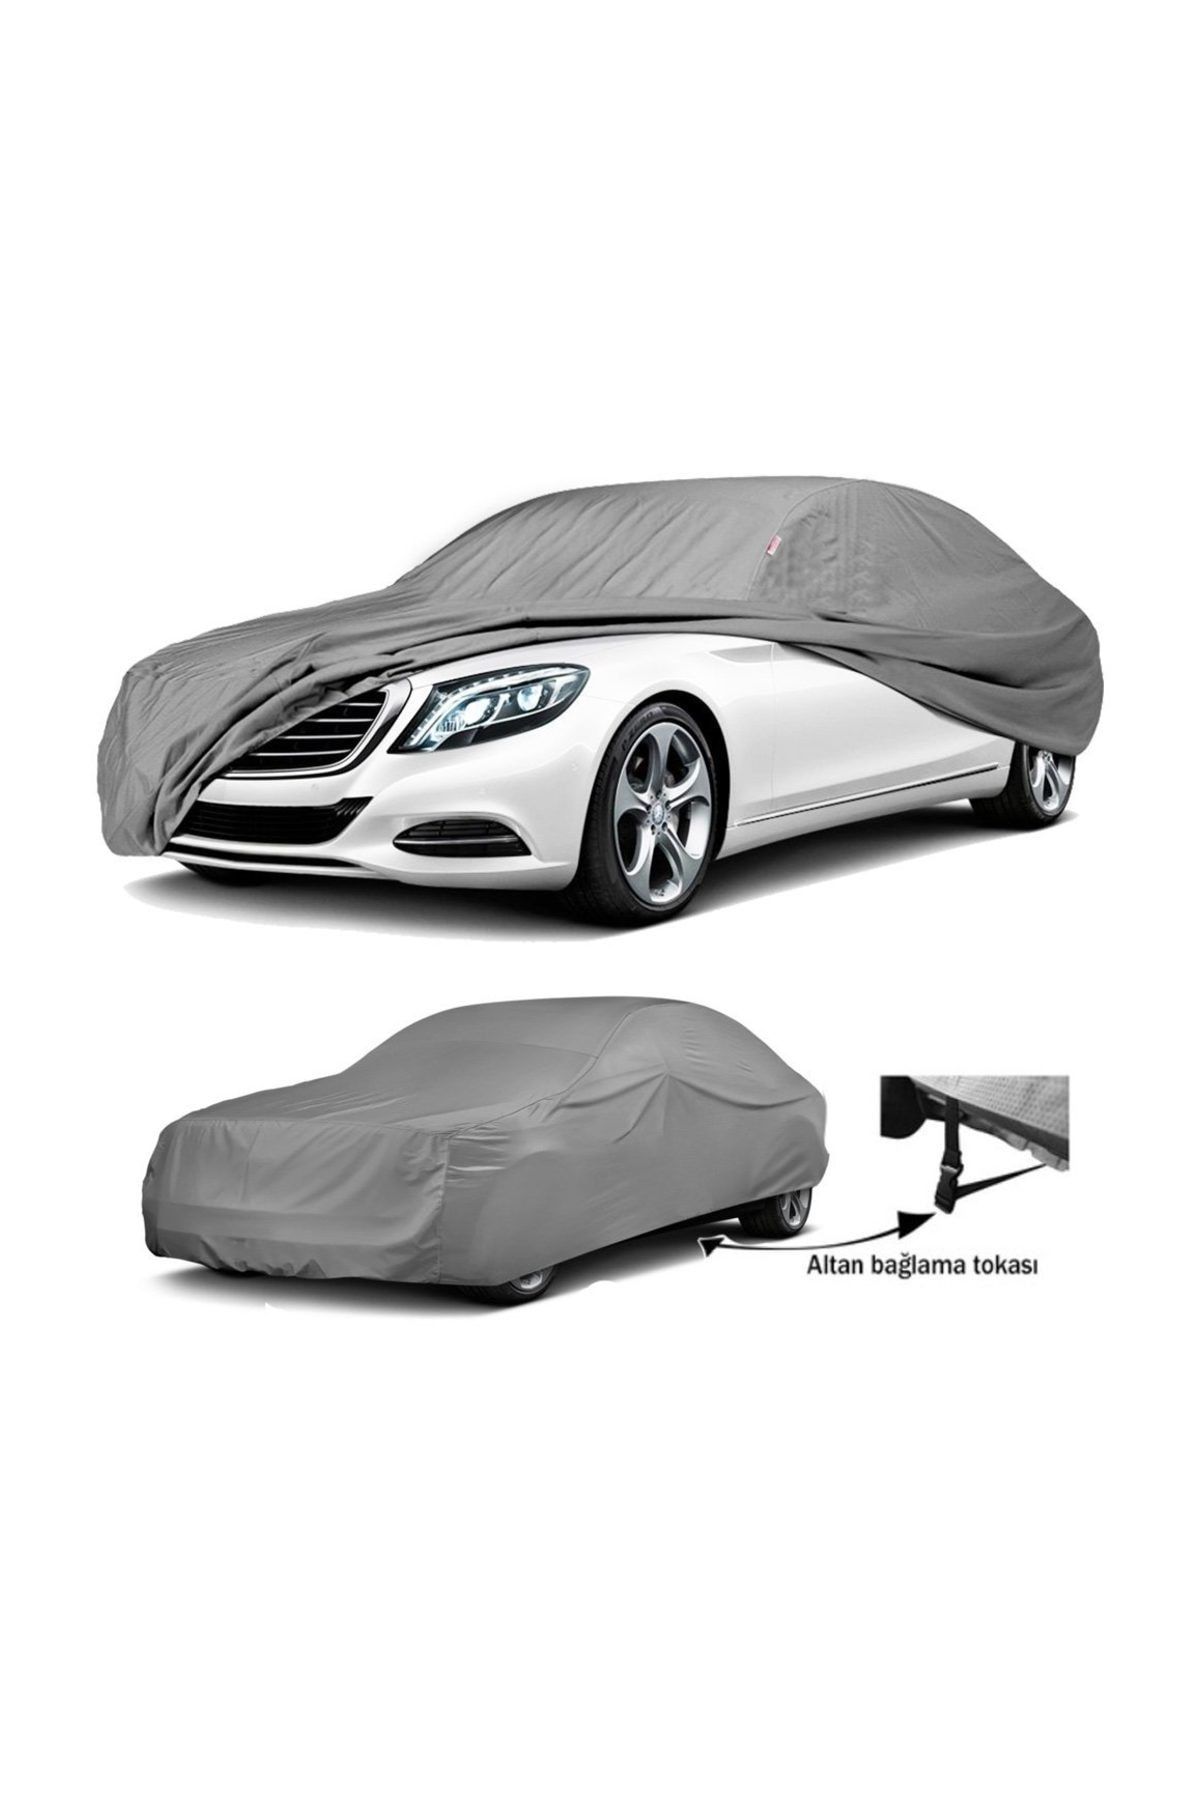 AutoEN VİNLEKS Audi A1 Auto Tarpaulin Car Tent Luxury Ultra